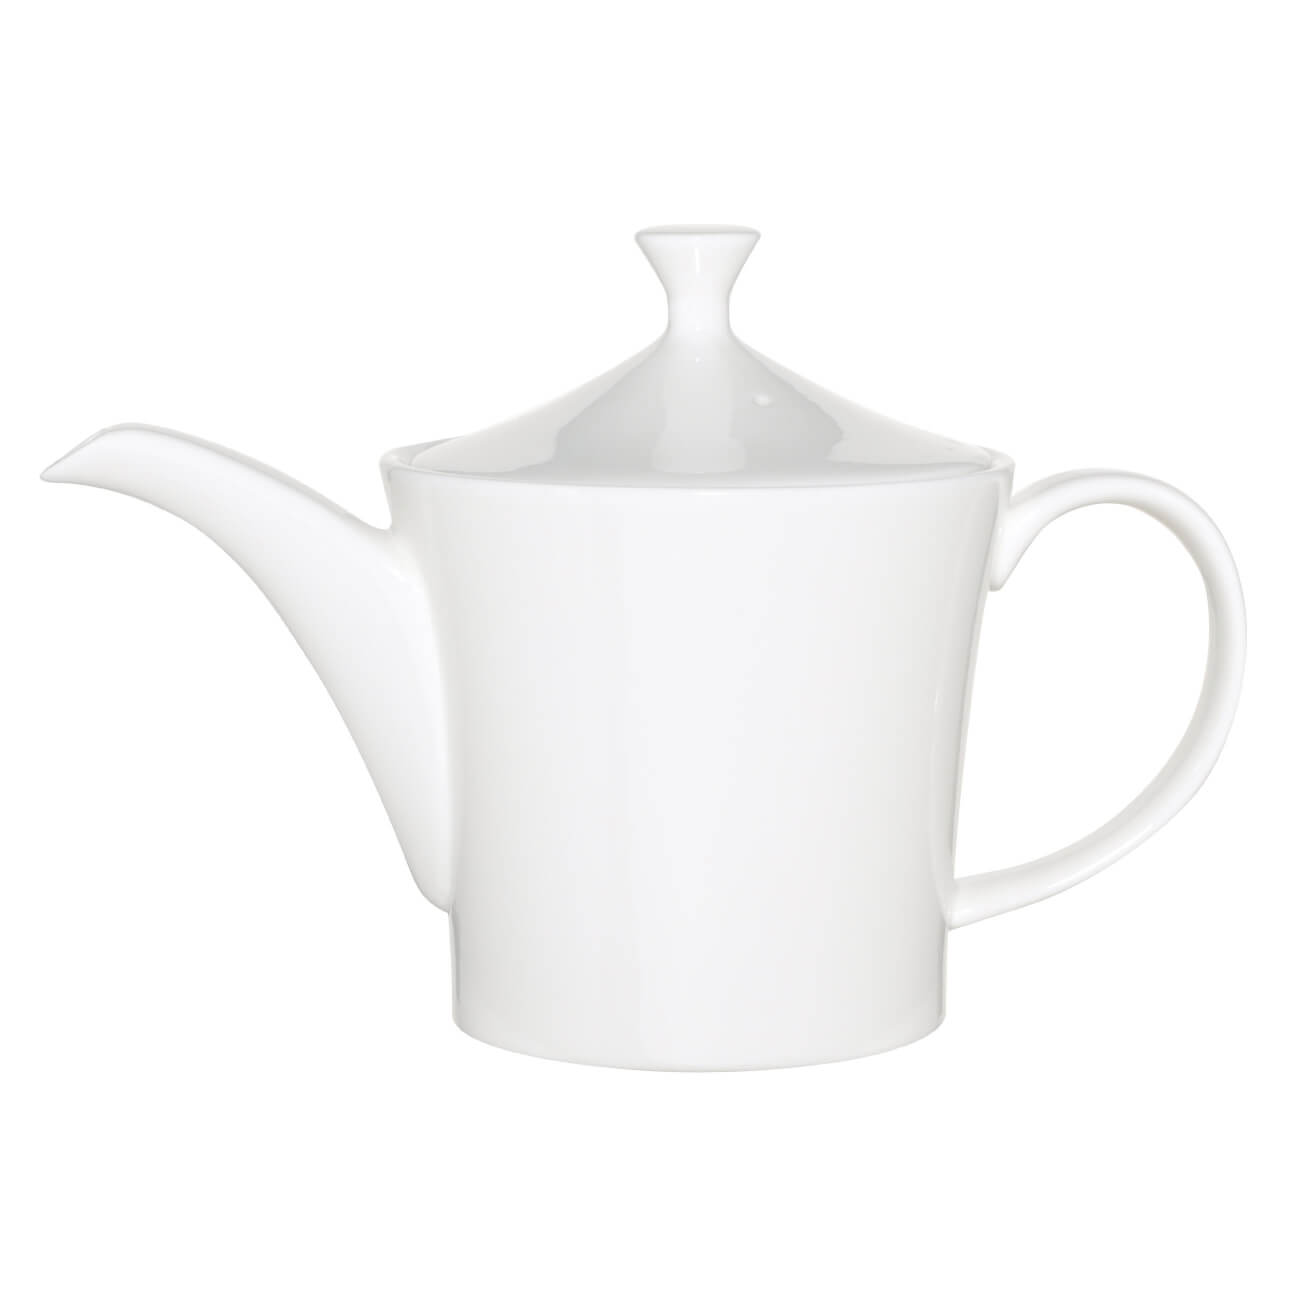 Чайник заварочный, 800 мл, фарфор F, белый, Ideal white чайник заварочный wilmax ж7476 800 мл